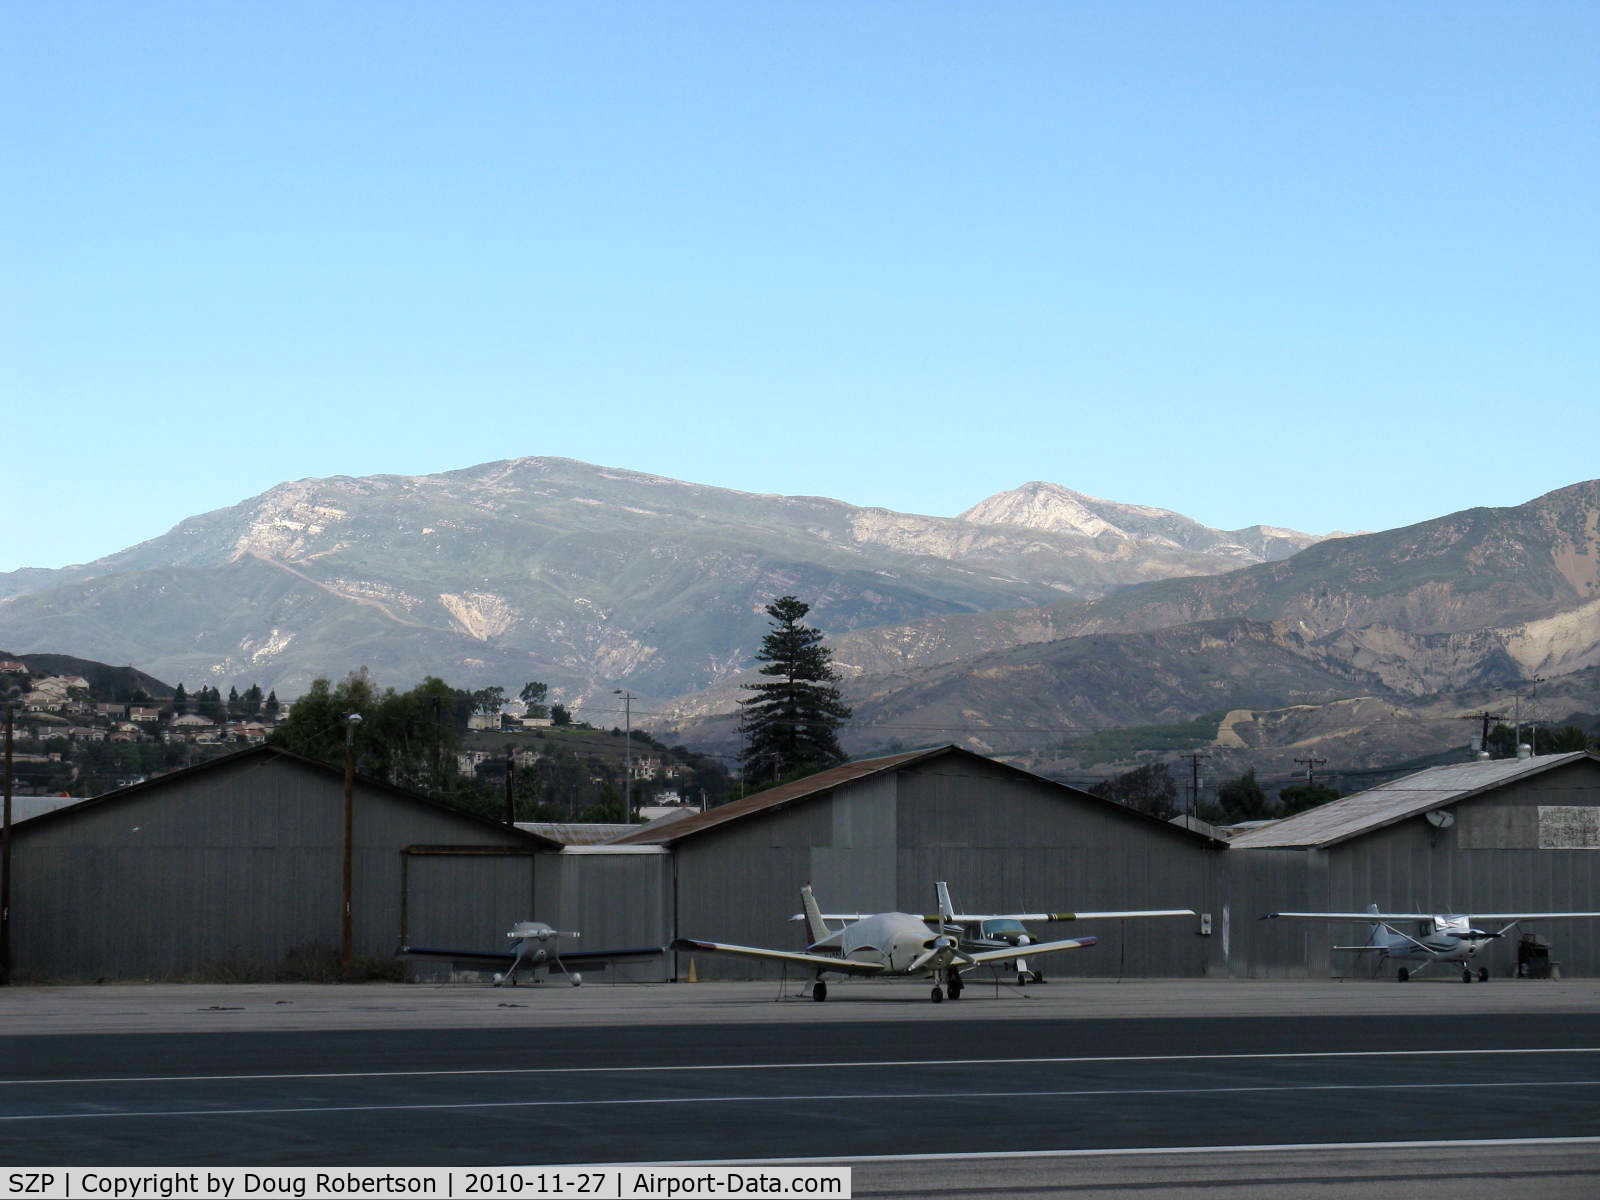 Santa Paula Airport (SZP) - Hines Peak 6,704' elev. in distance beyond frontal  peaks in Topa Topa Mountains, 6,244' elev. to left above Santa Paula